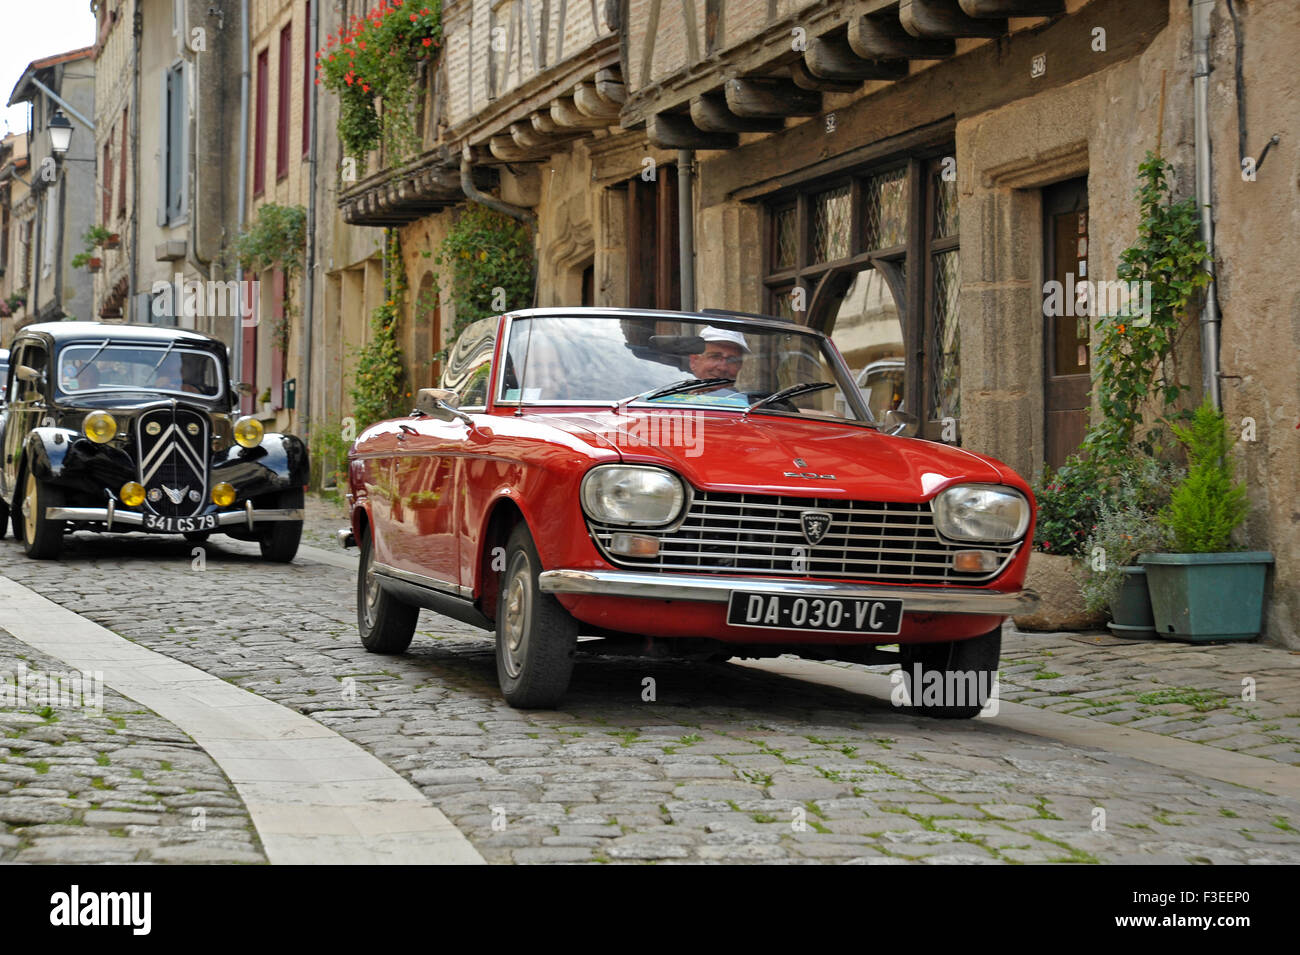 Peugeot 304 convertible classic car Stock Photo